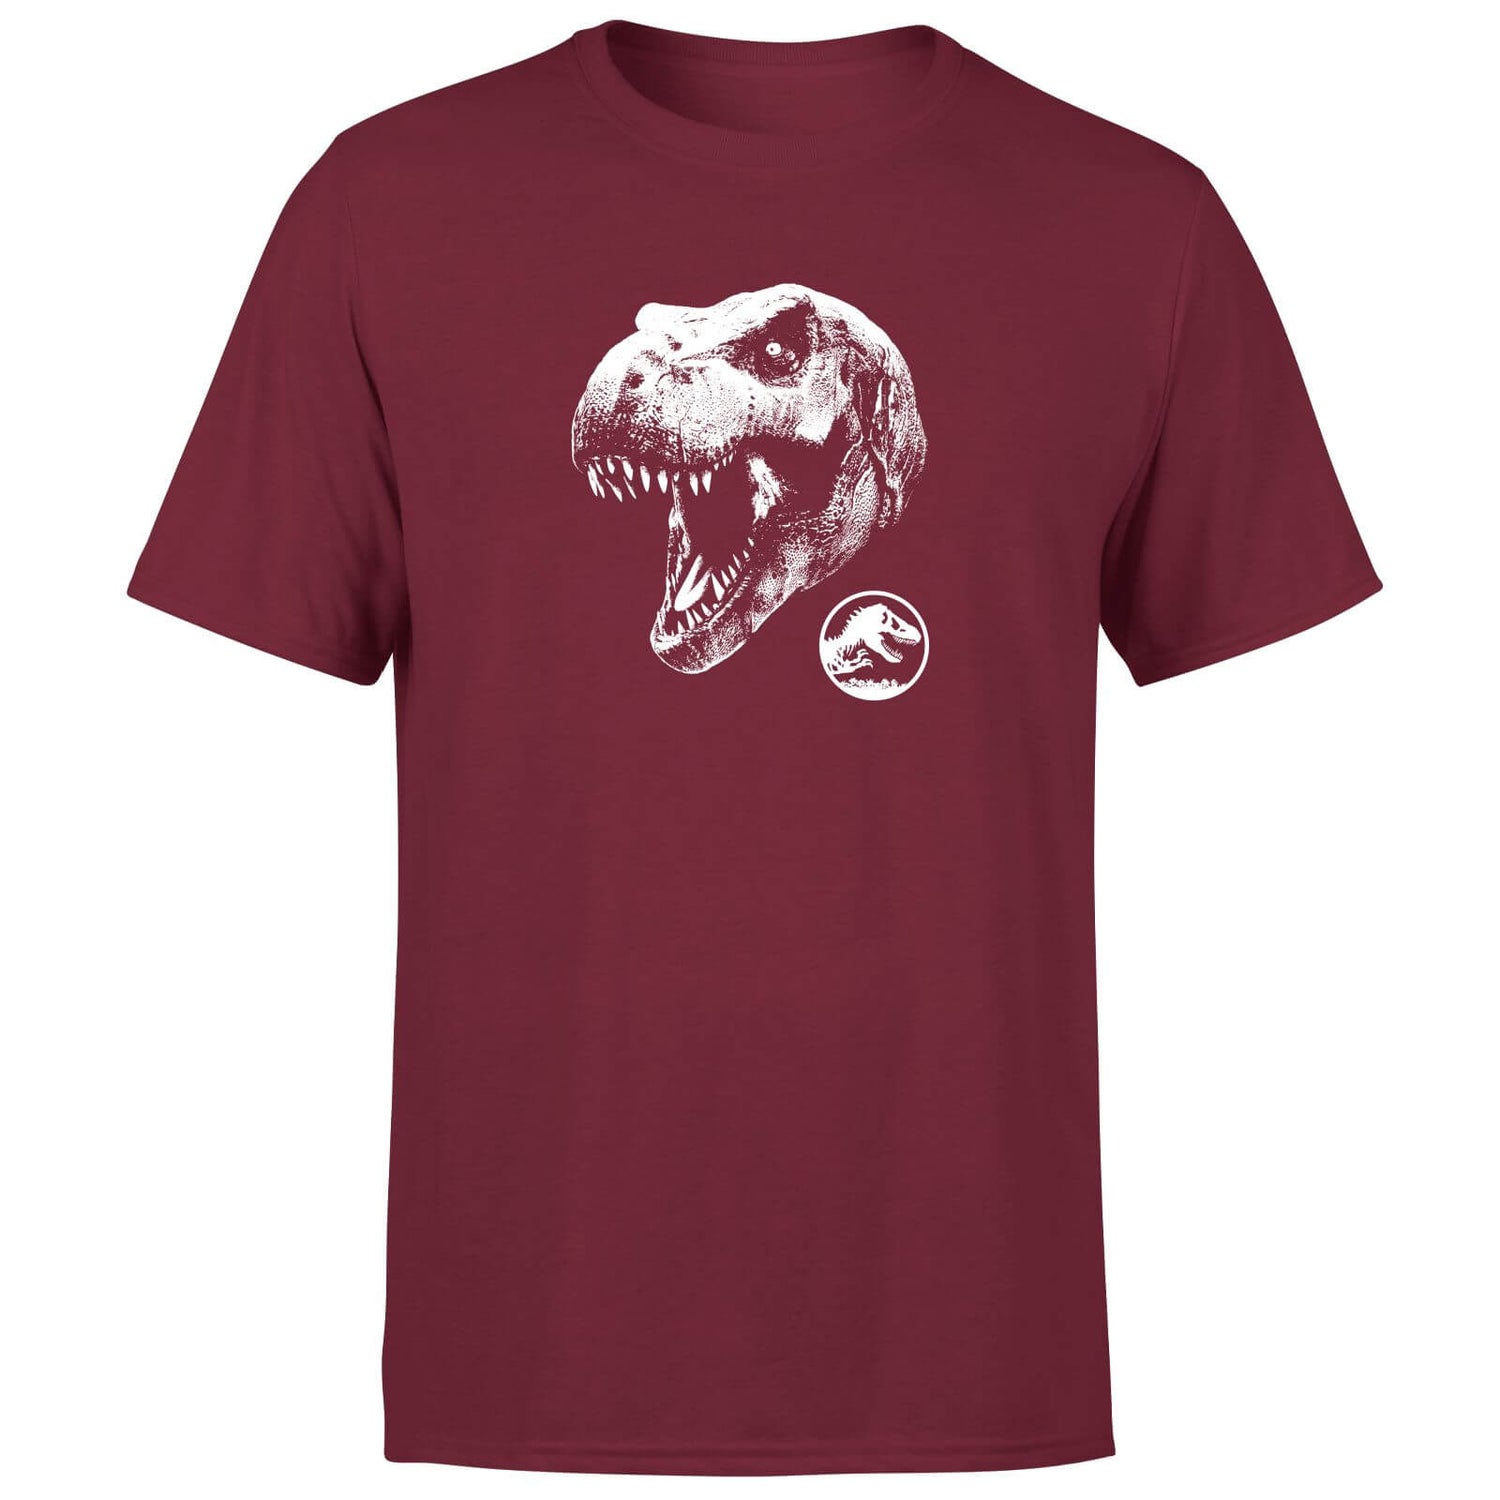 Jurassic Park T Rex Men's T-Shirt - Burgundy